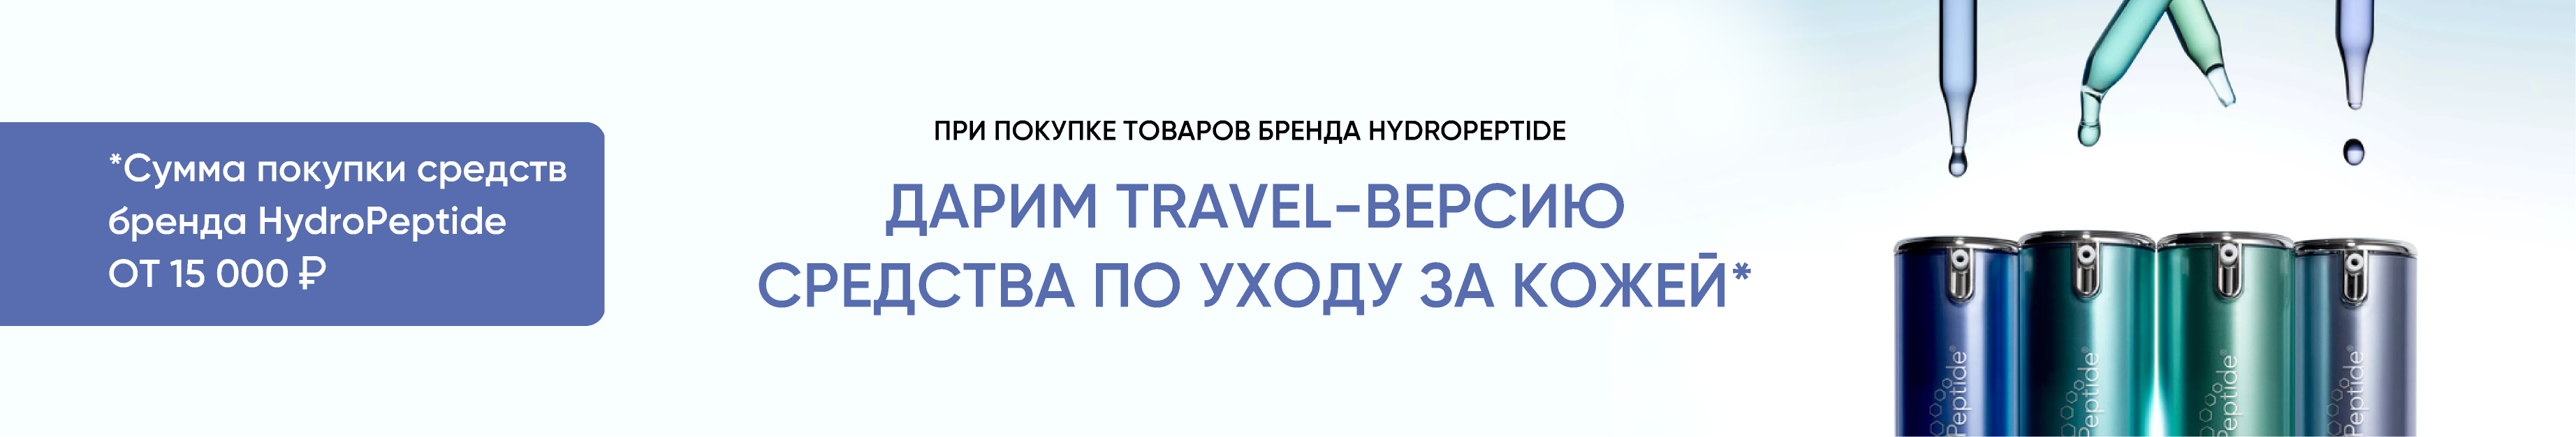  Travel-версия средства HydroPeptide в подарок